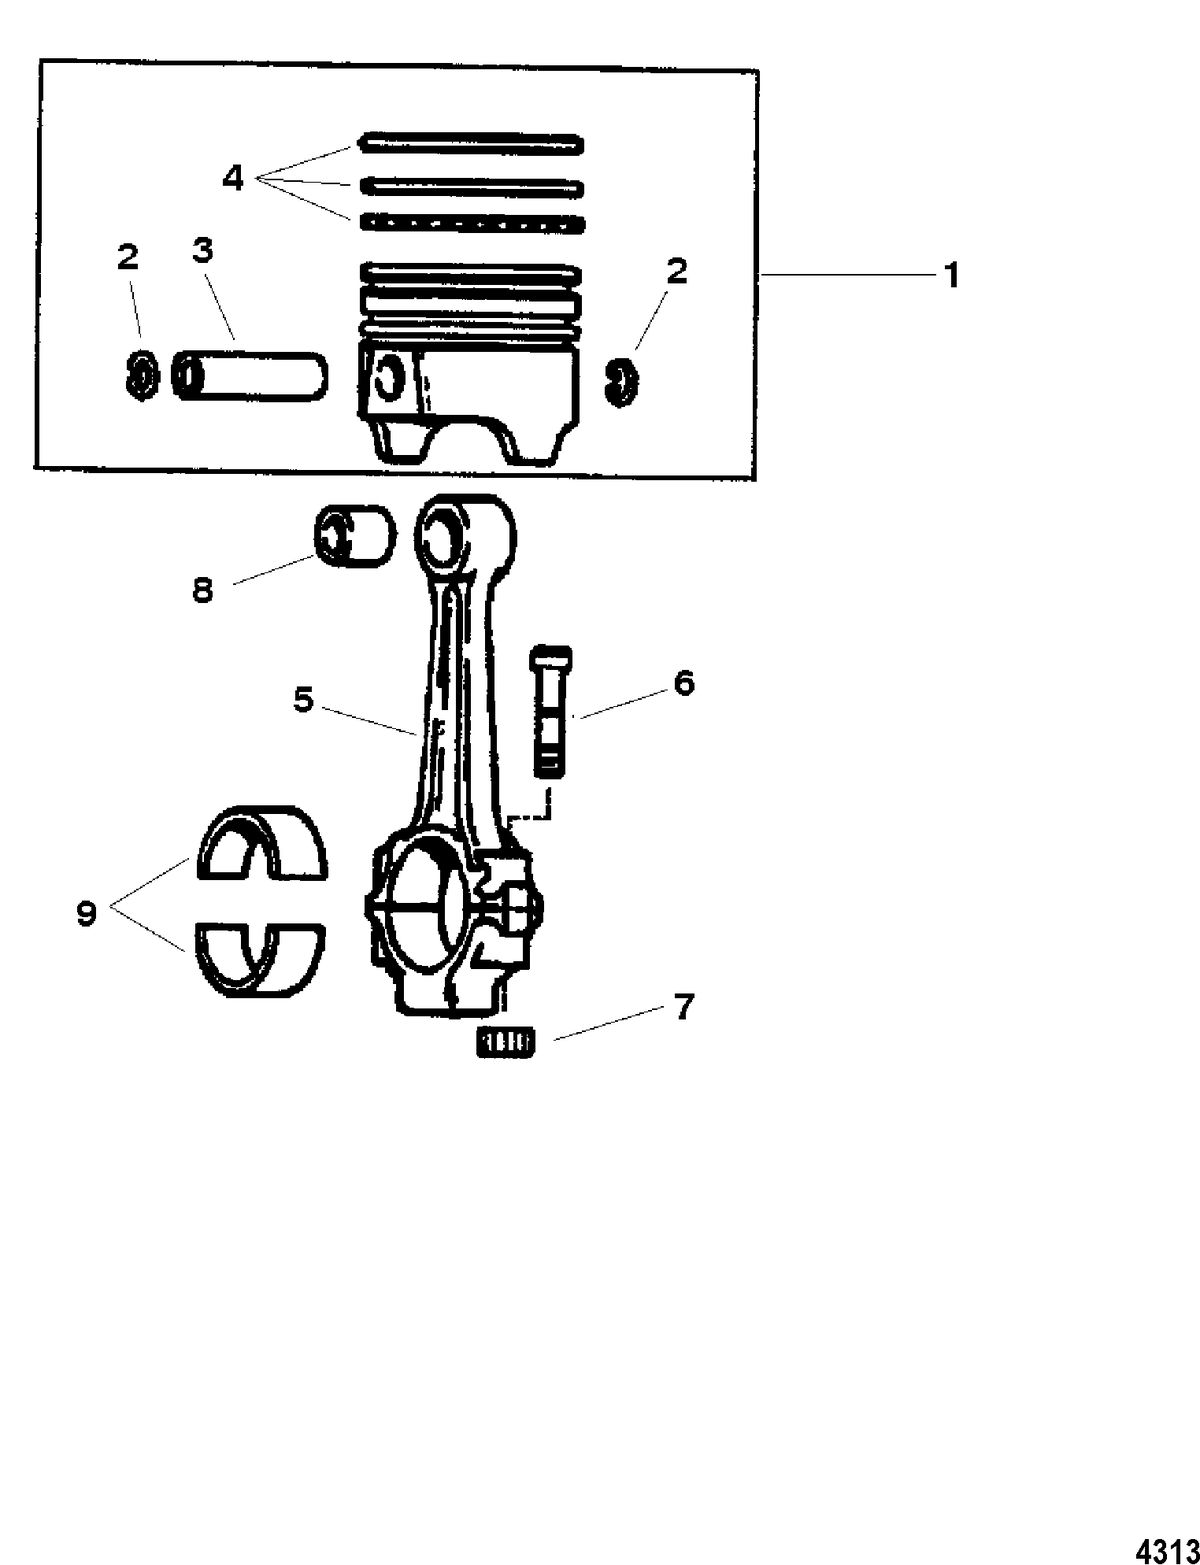 MERCRUISER CUMMINS/MERCRUISER DIESEL 7.3L D-TRONIC BRAVO Connecting Rod, Piston, and Related Parts